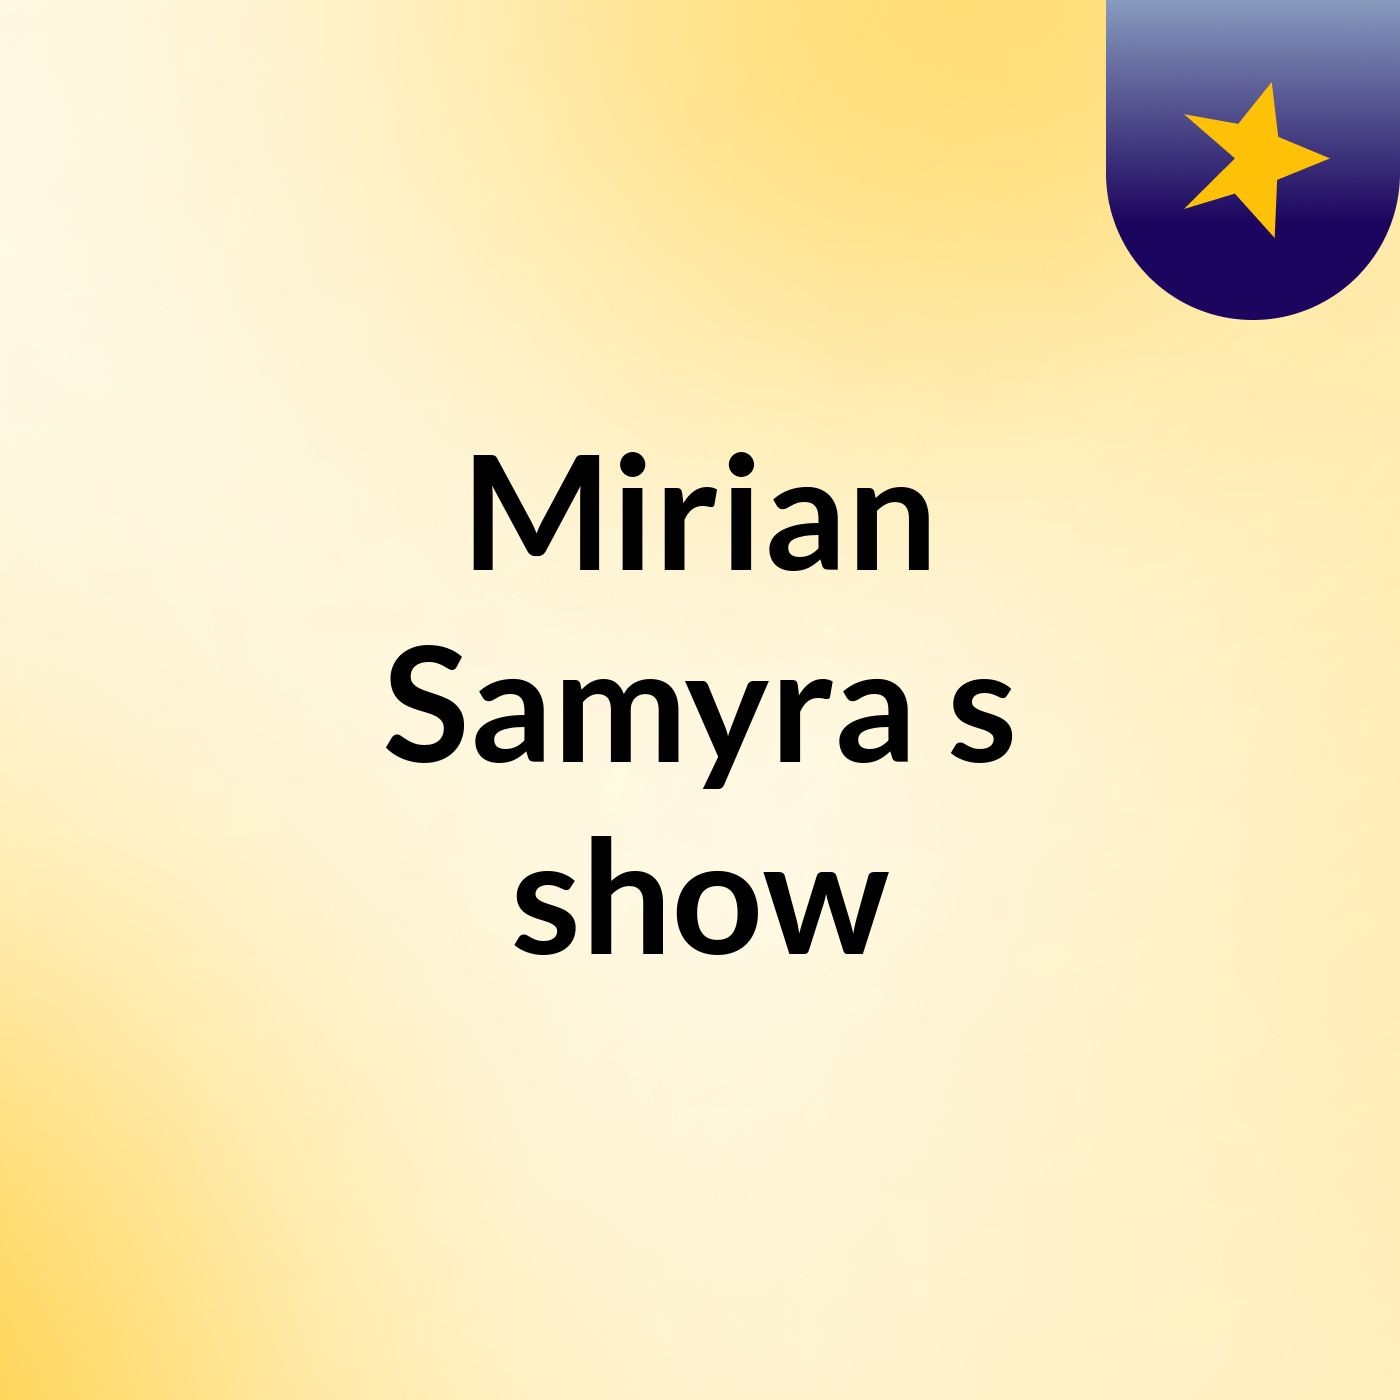 Mirian Samyra's show